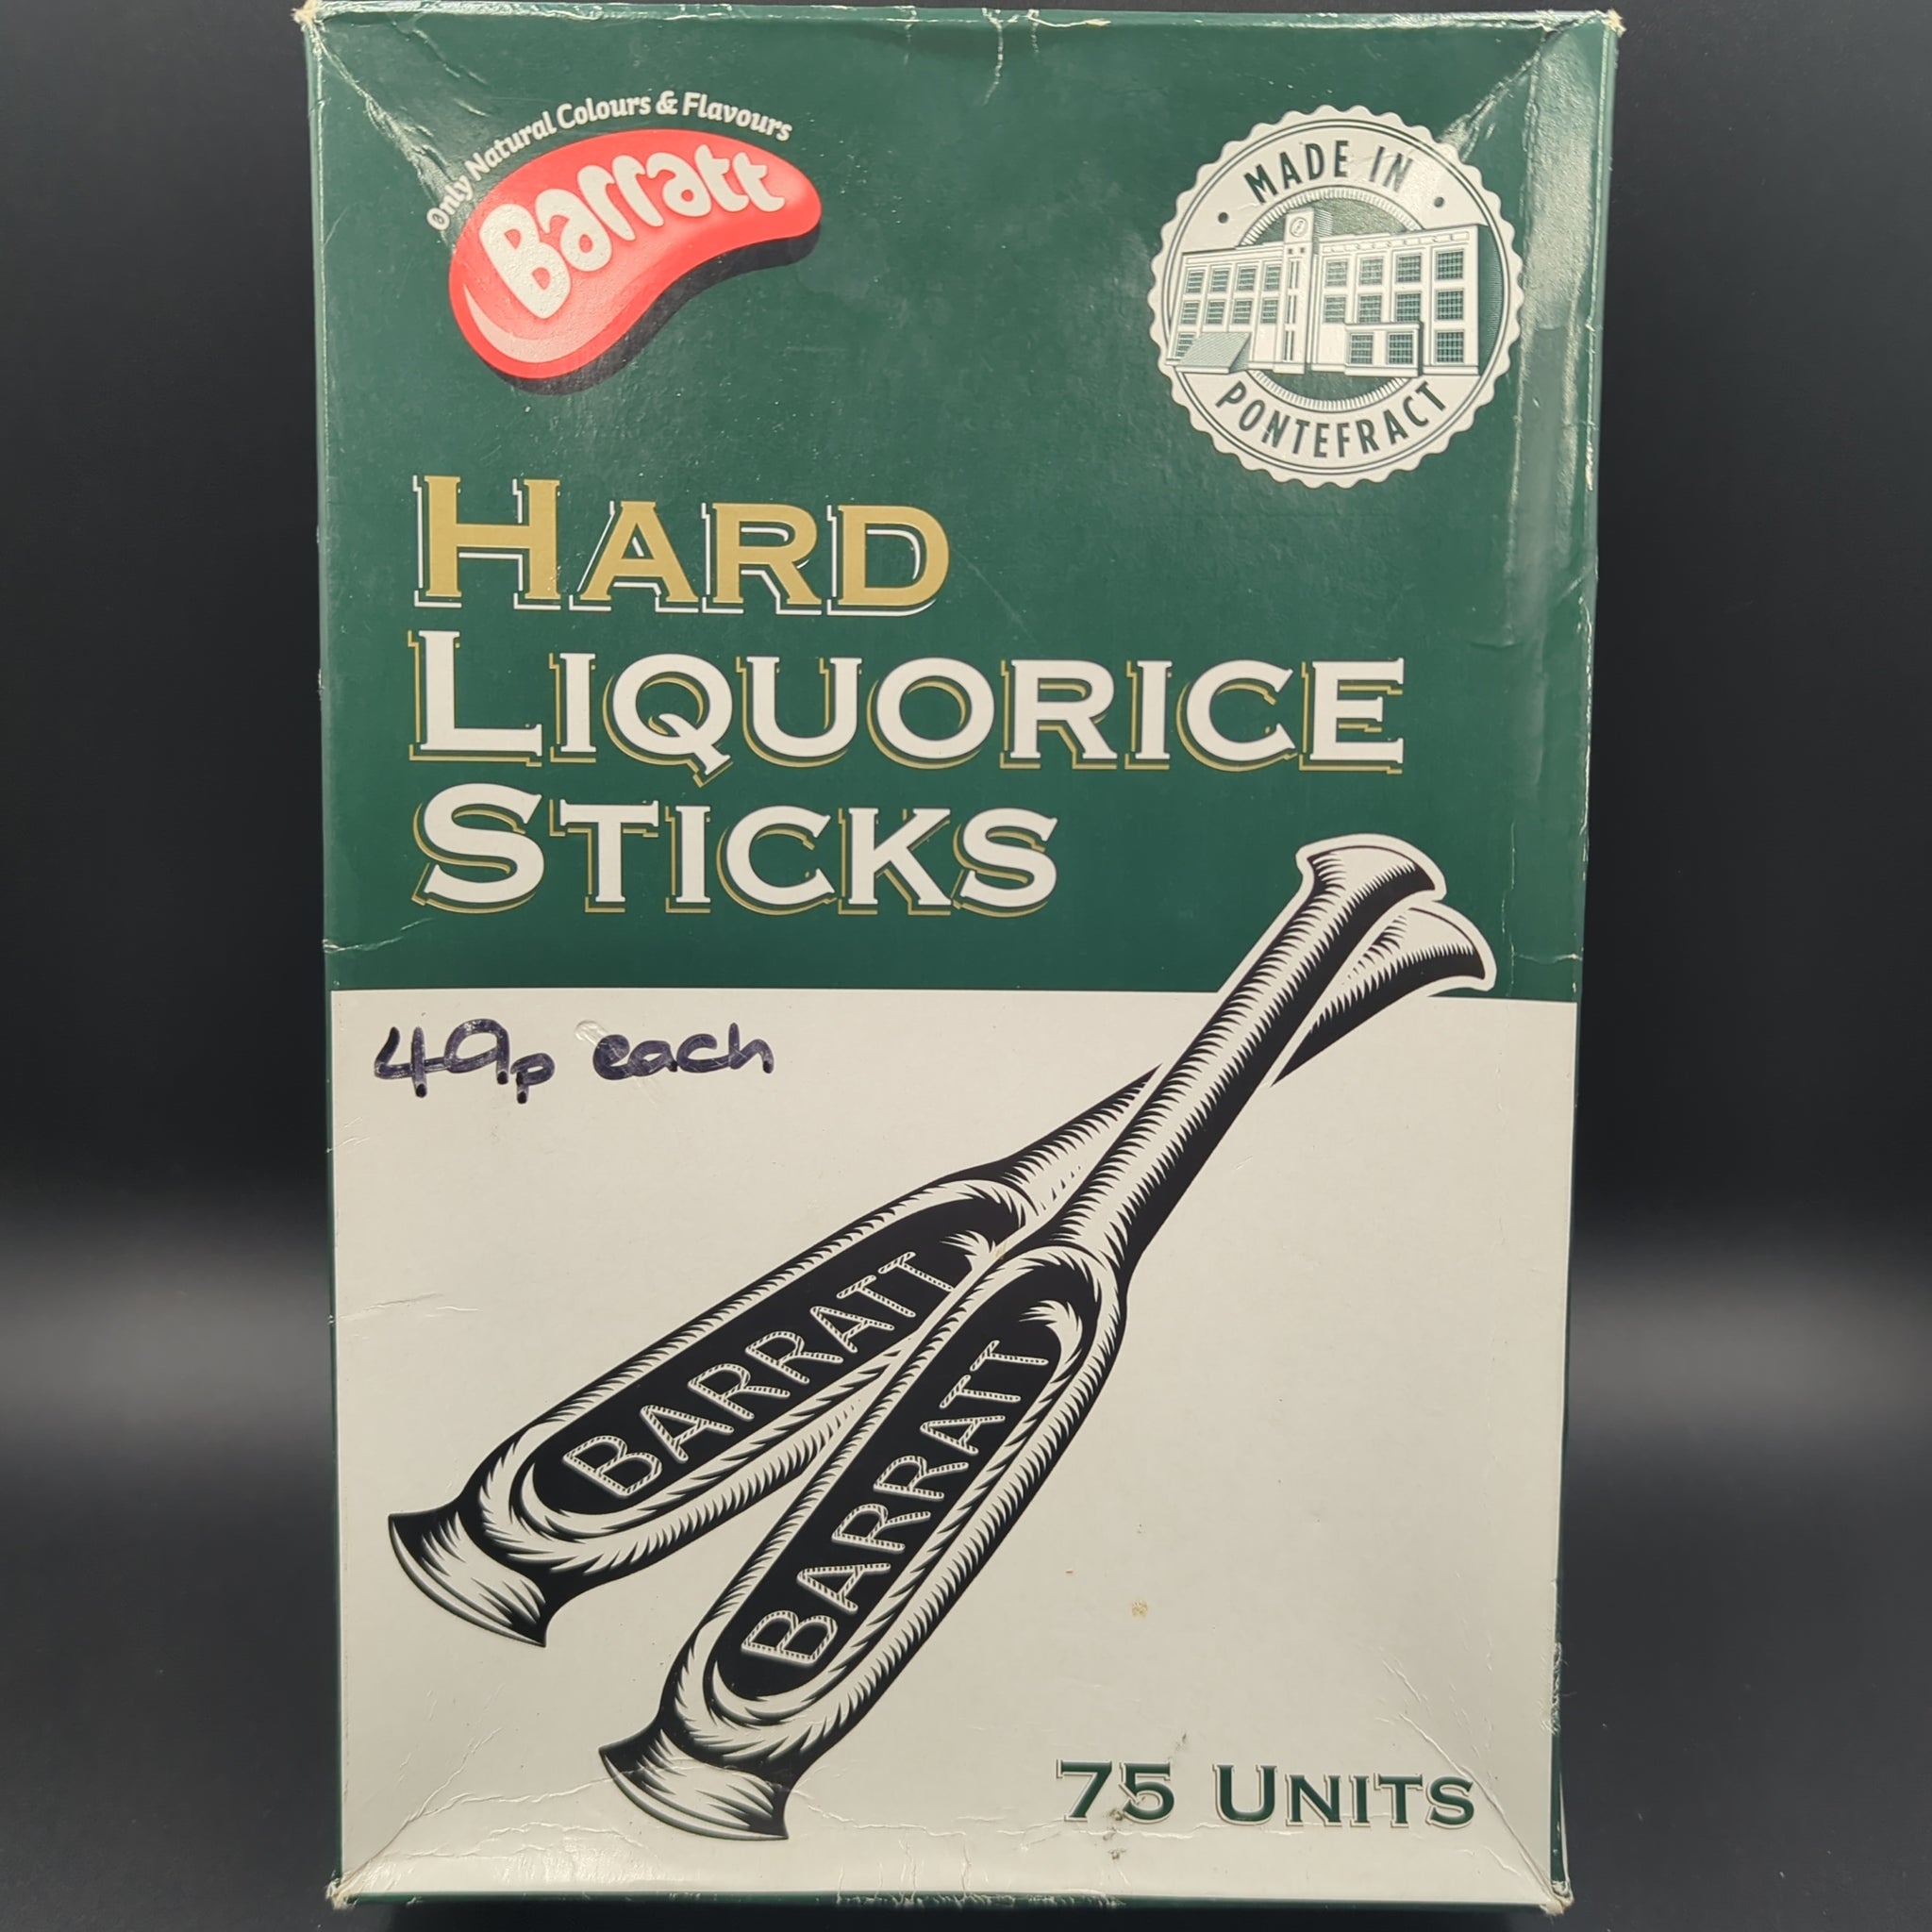 Barratt Hard Liquorice sticks each